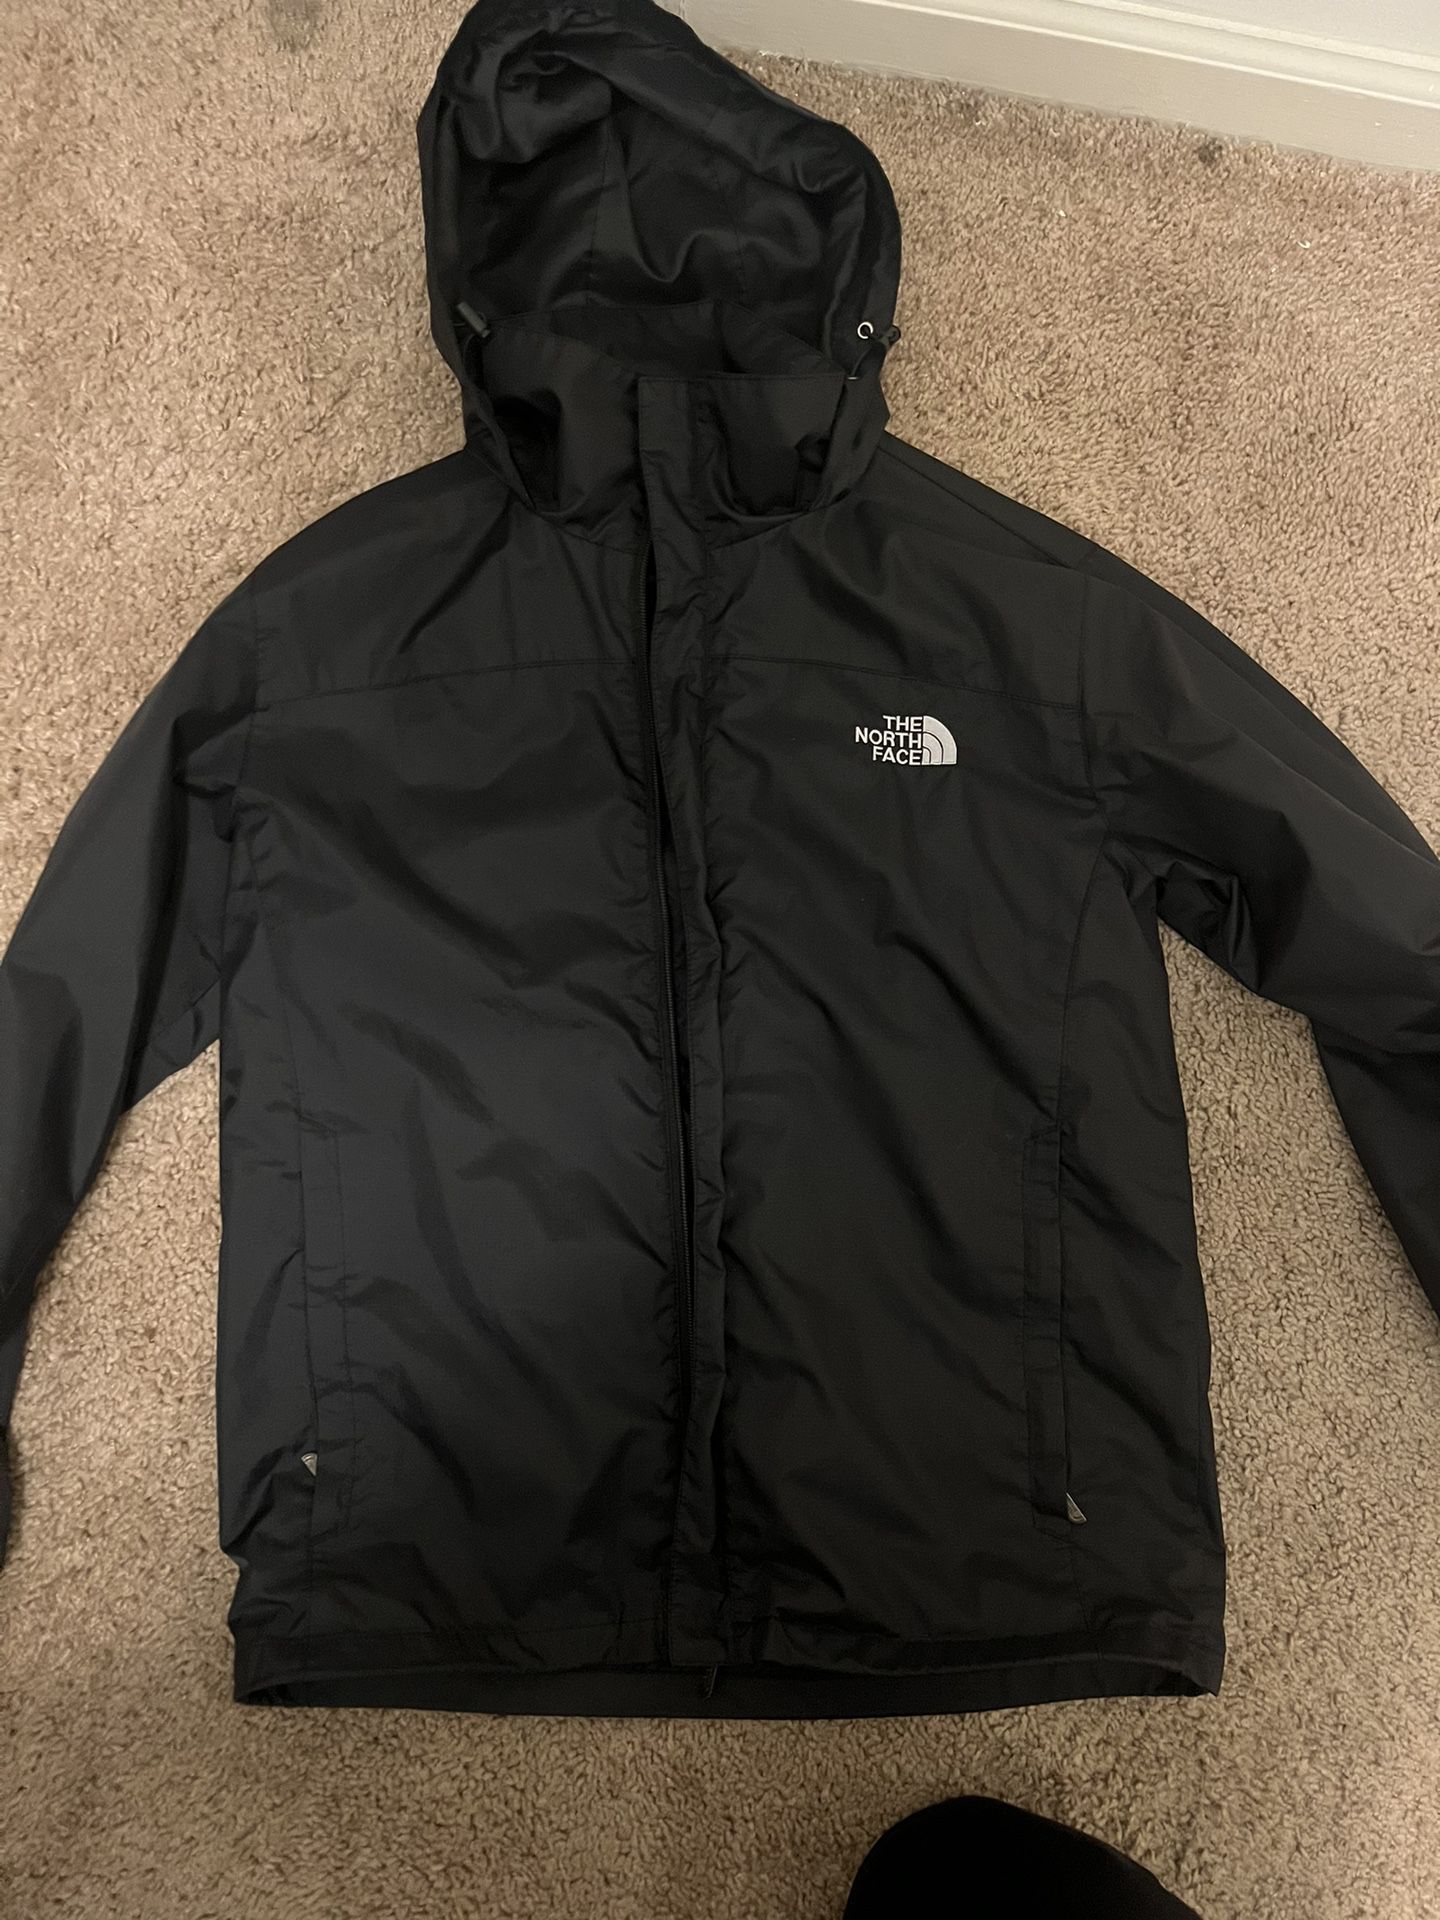 north face rain jacket size L